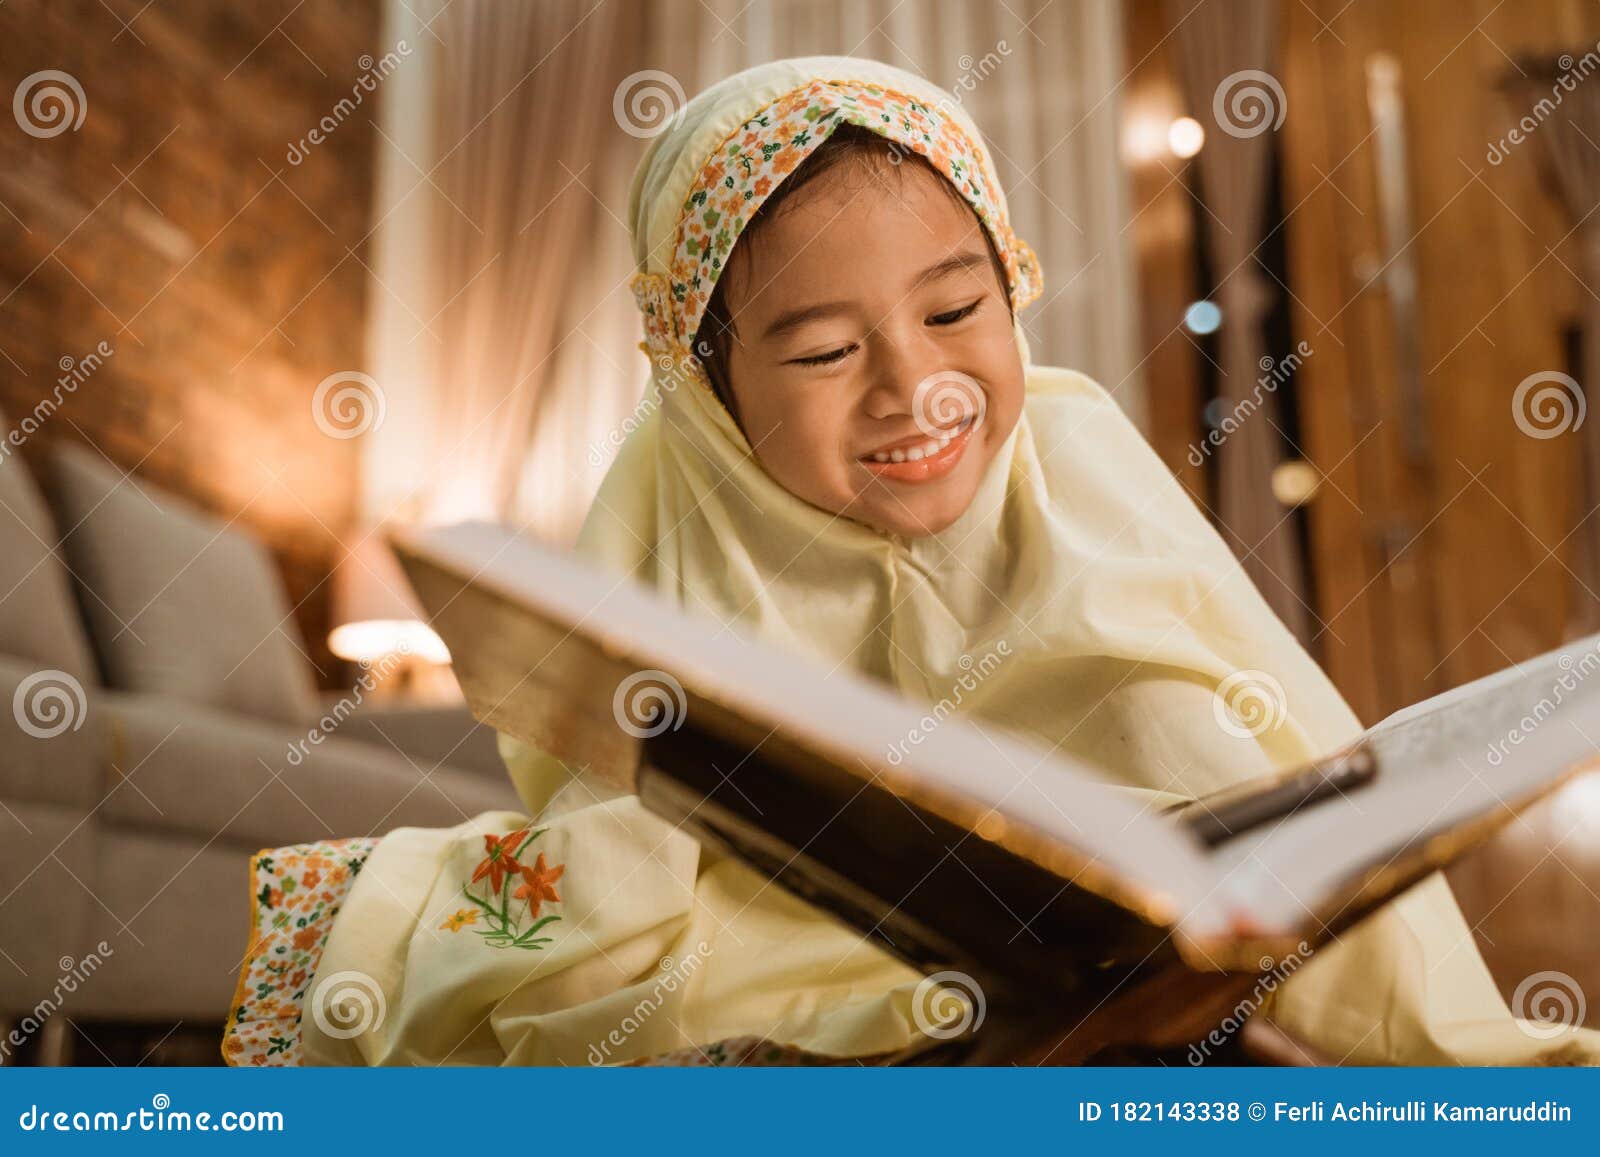 Musliim Girl Reading Quran in Mosque Stock Image - Image of female,  spiritual: 140431215